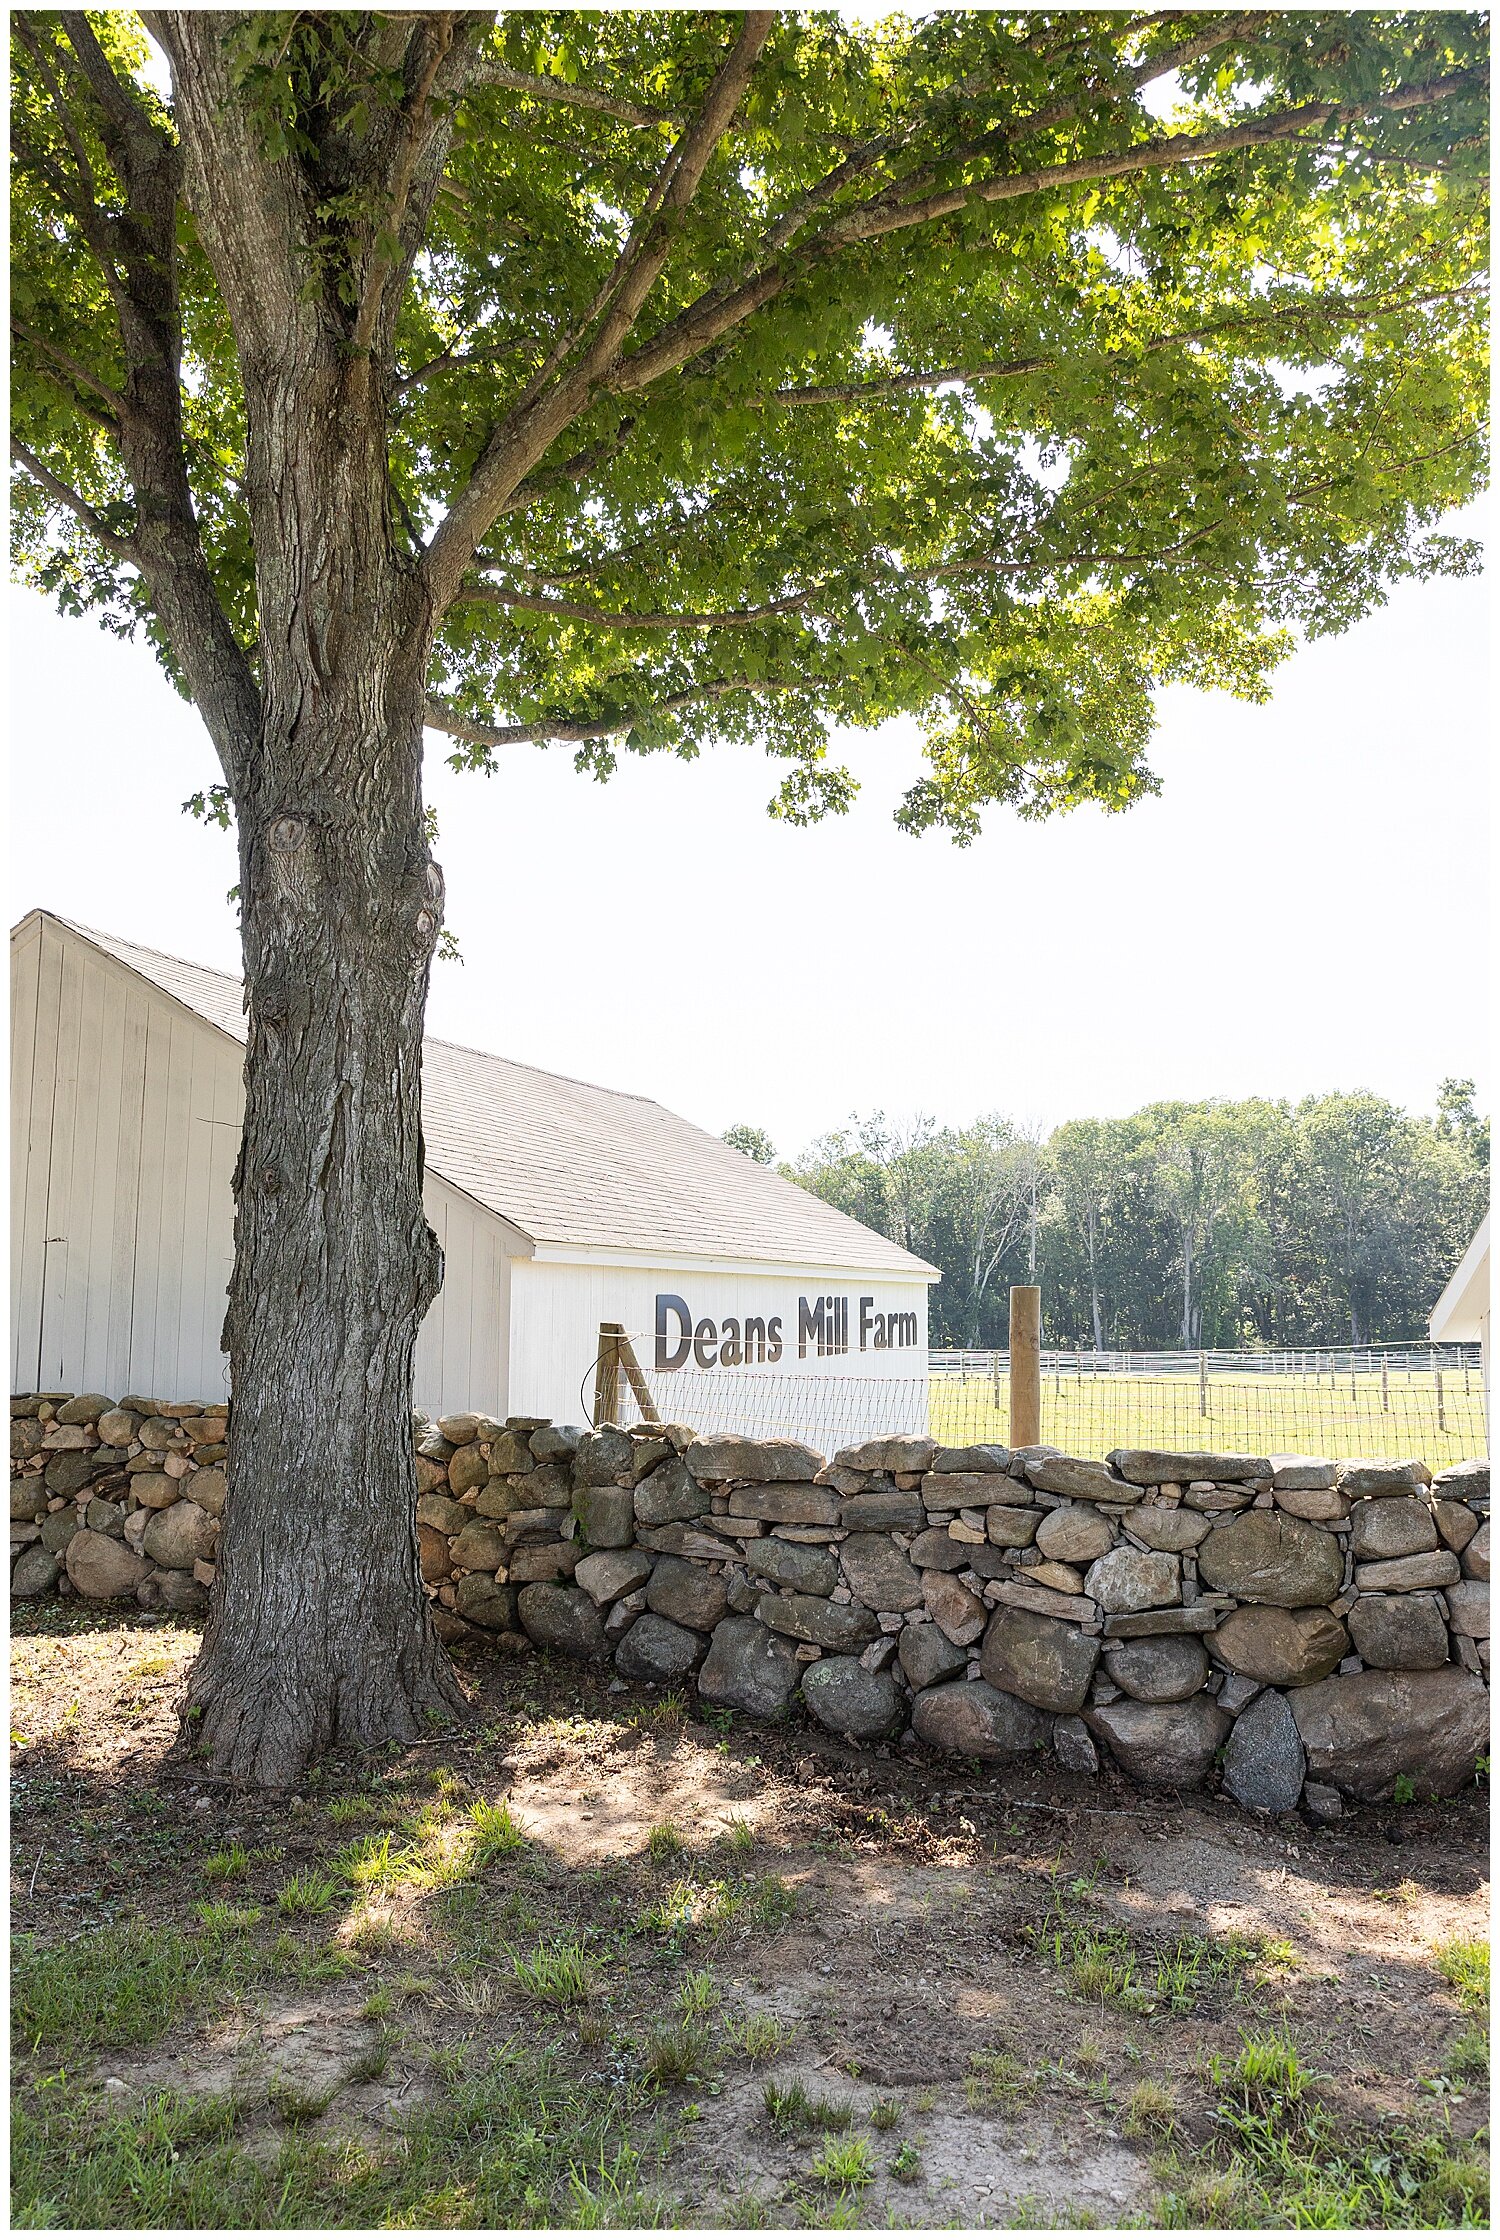 Deansmills Farm Lets Meet